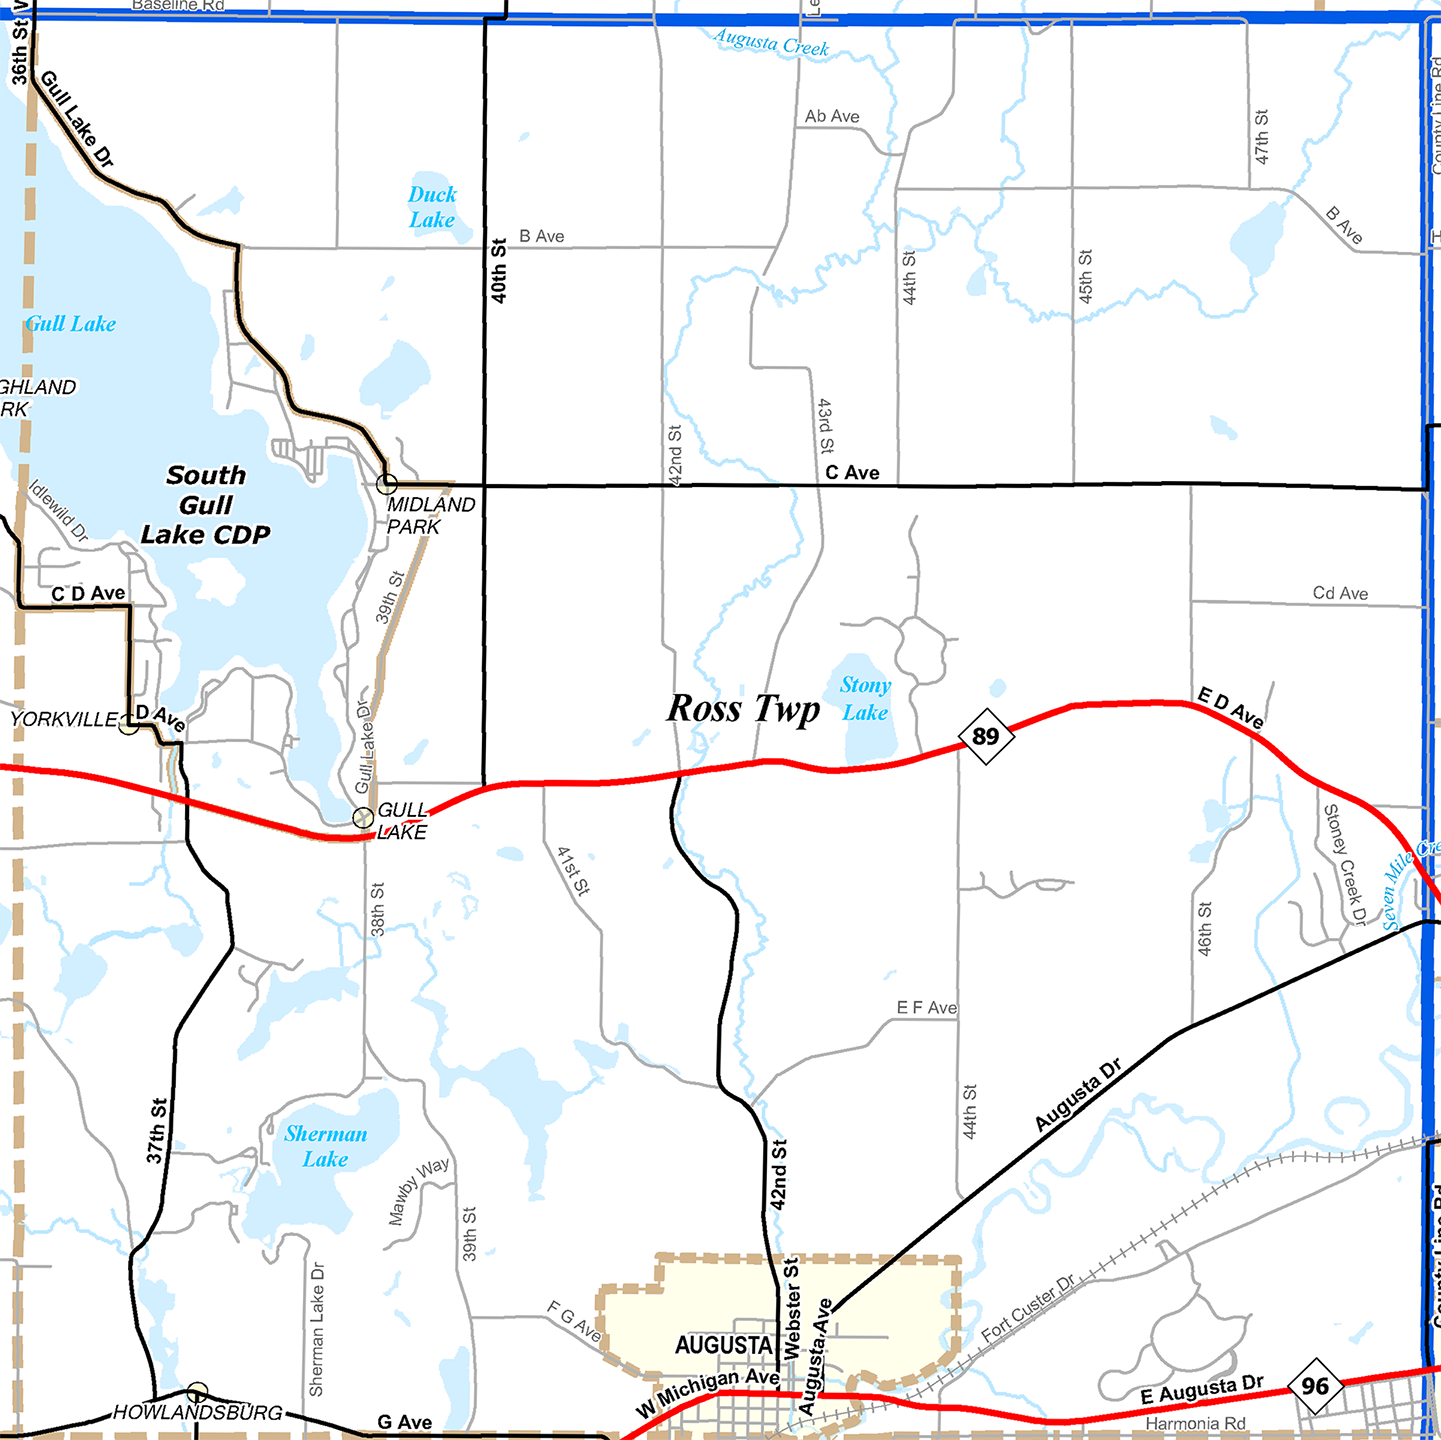 2009 Ross Township Michigan map